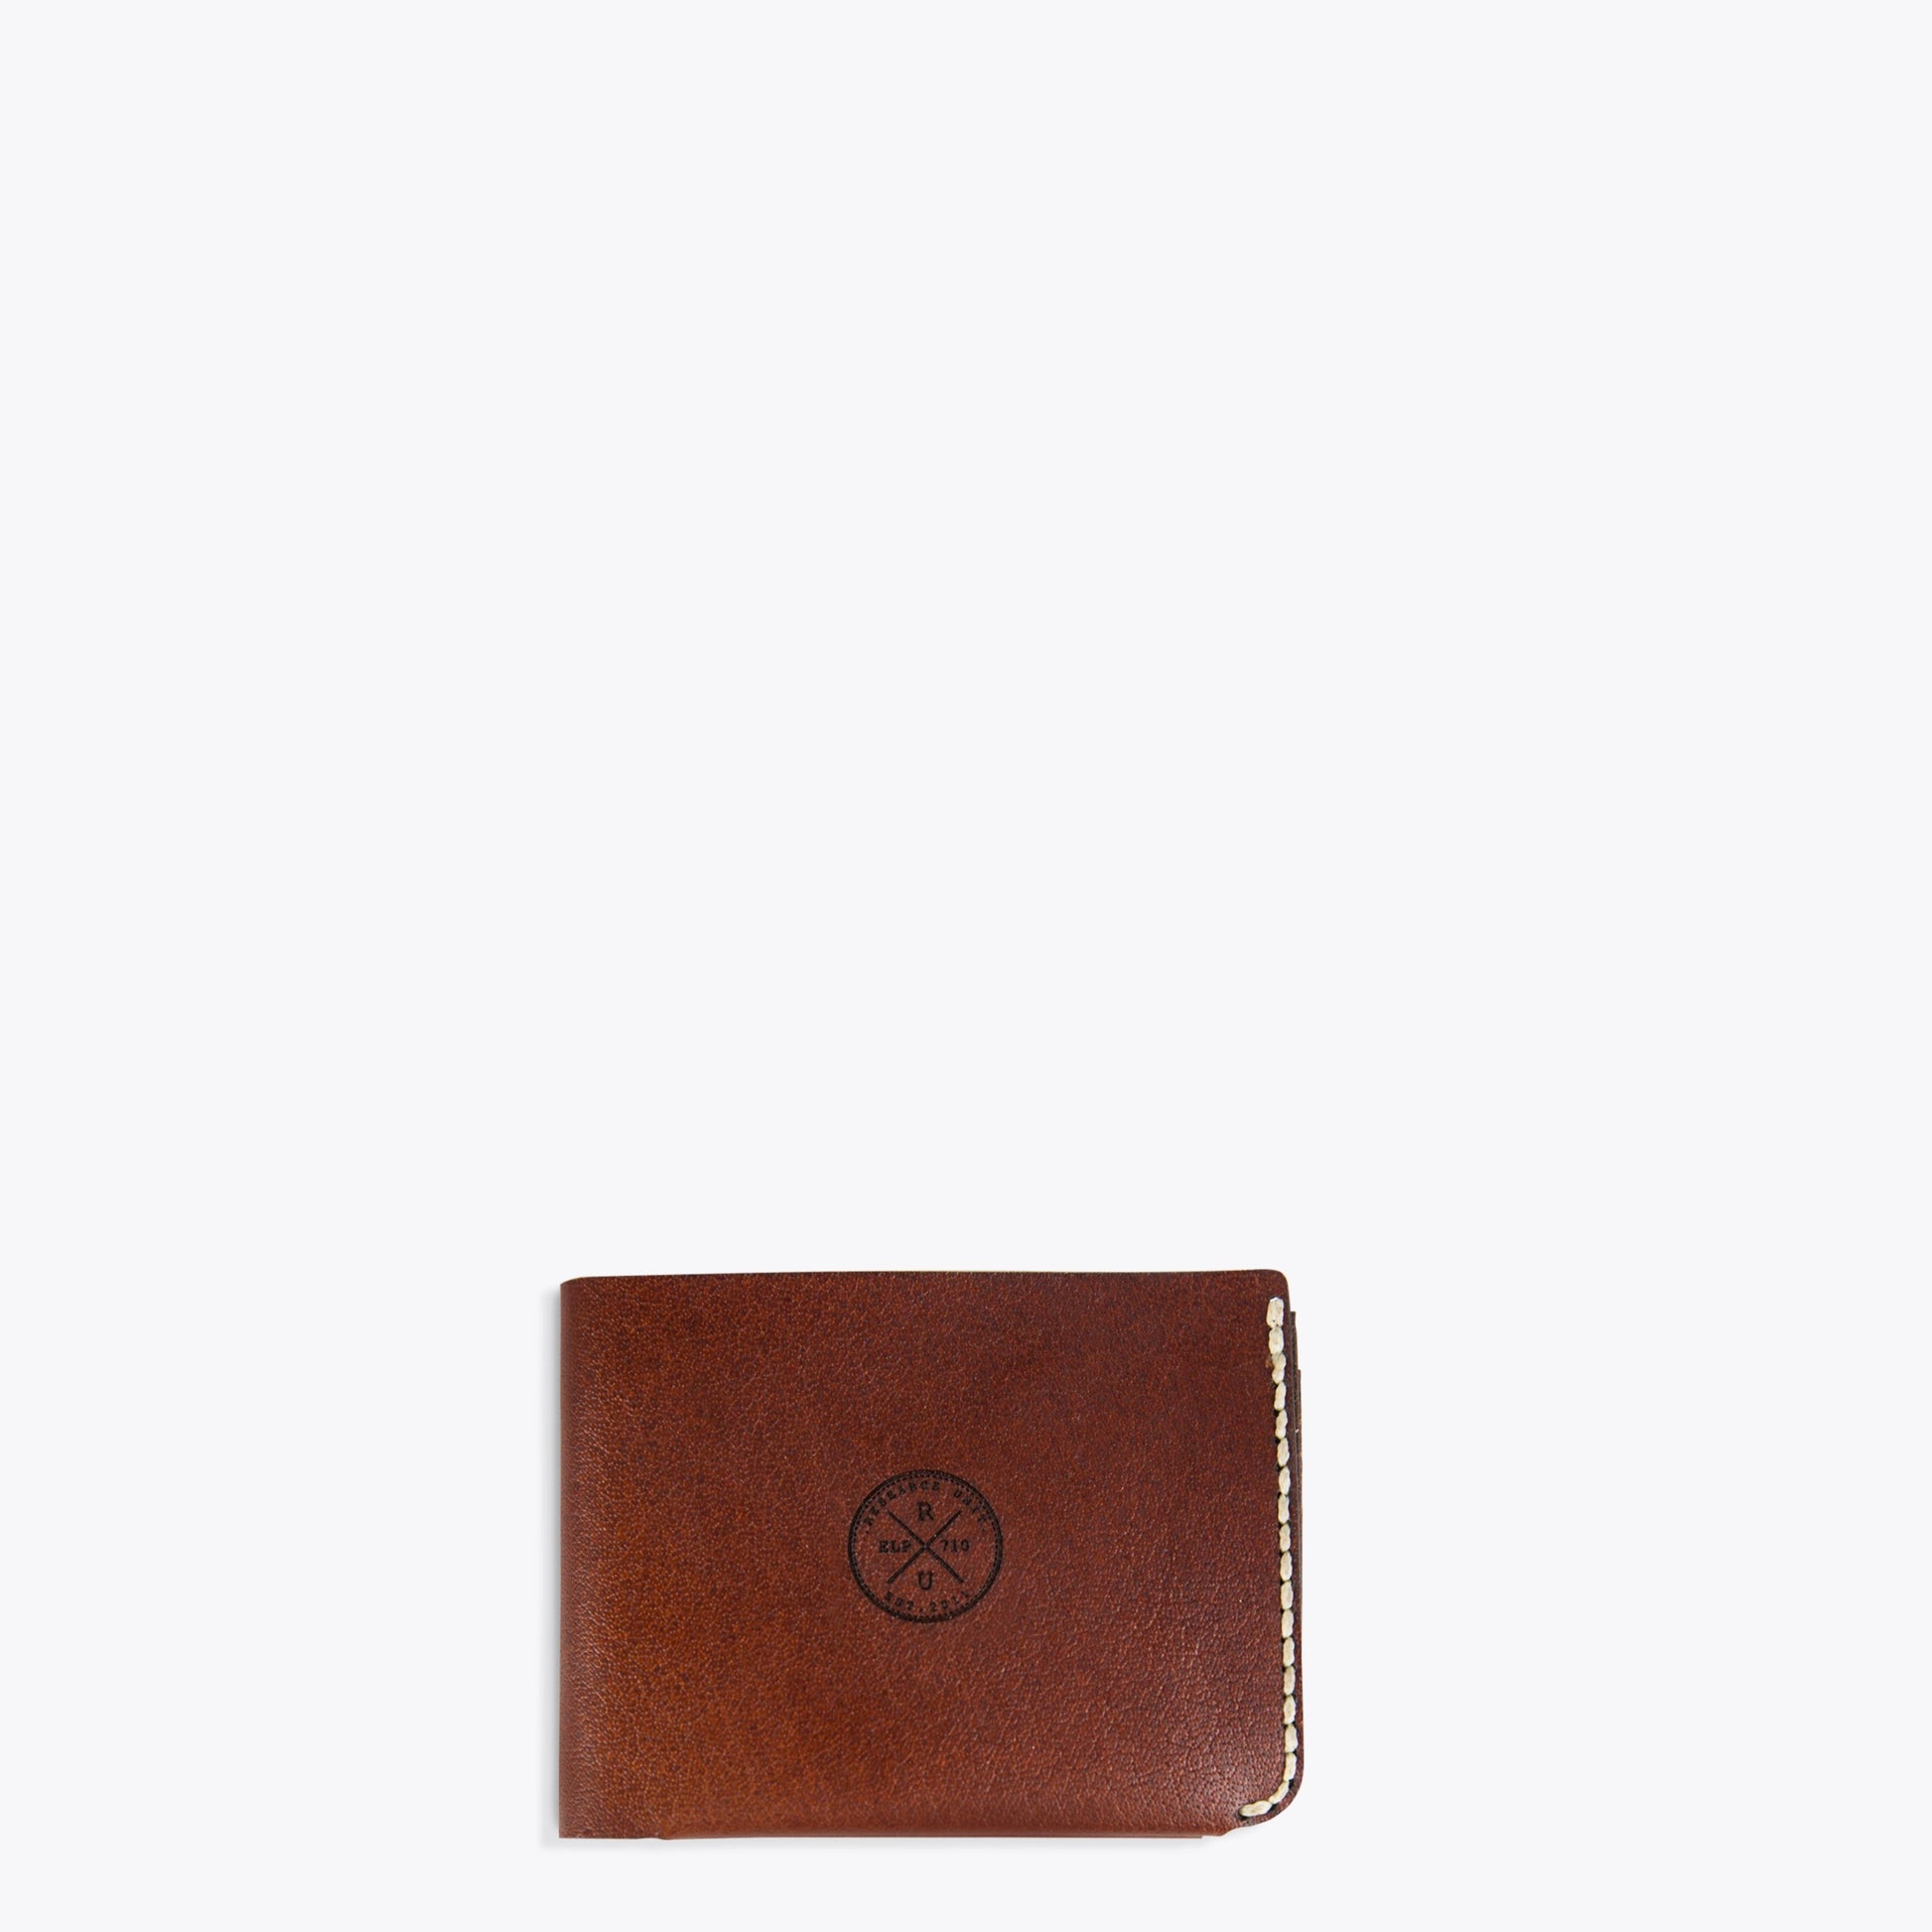 Billfold Wallet with pocket (Tan)